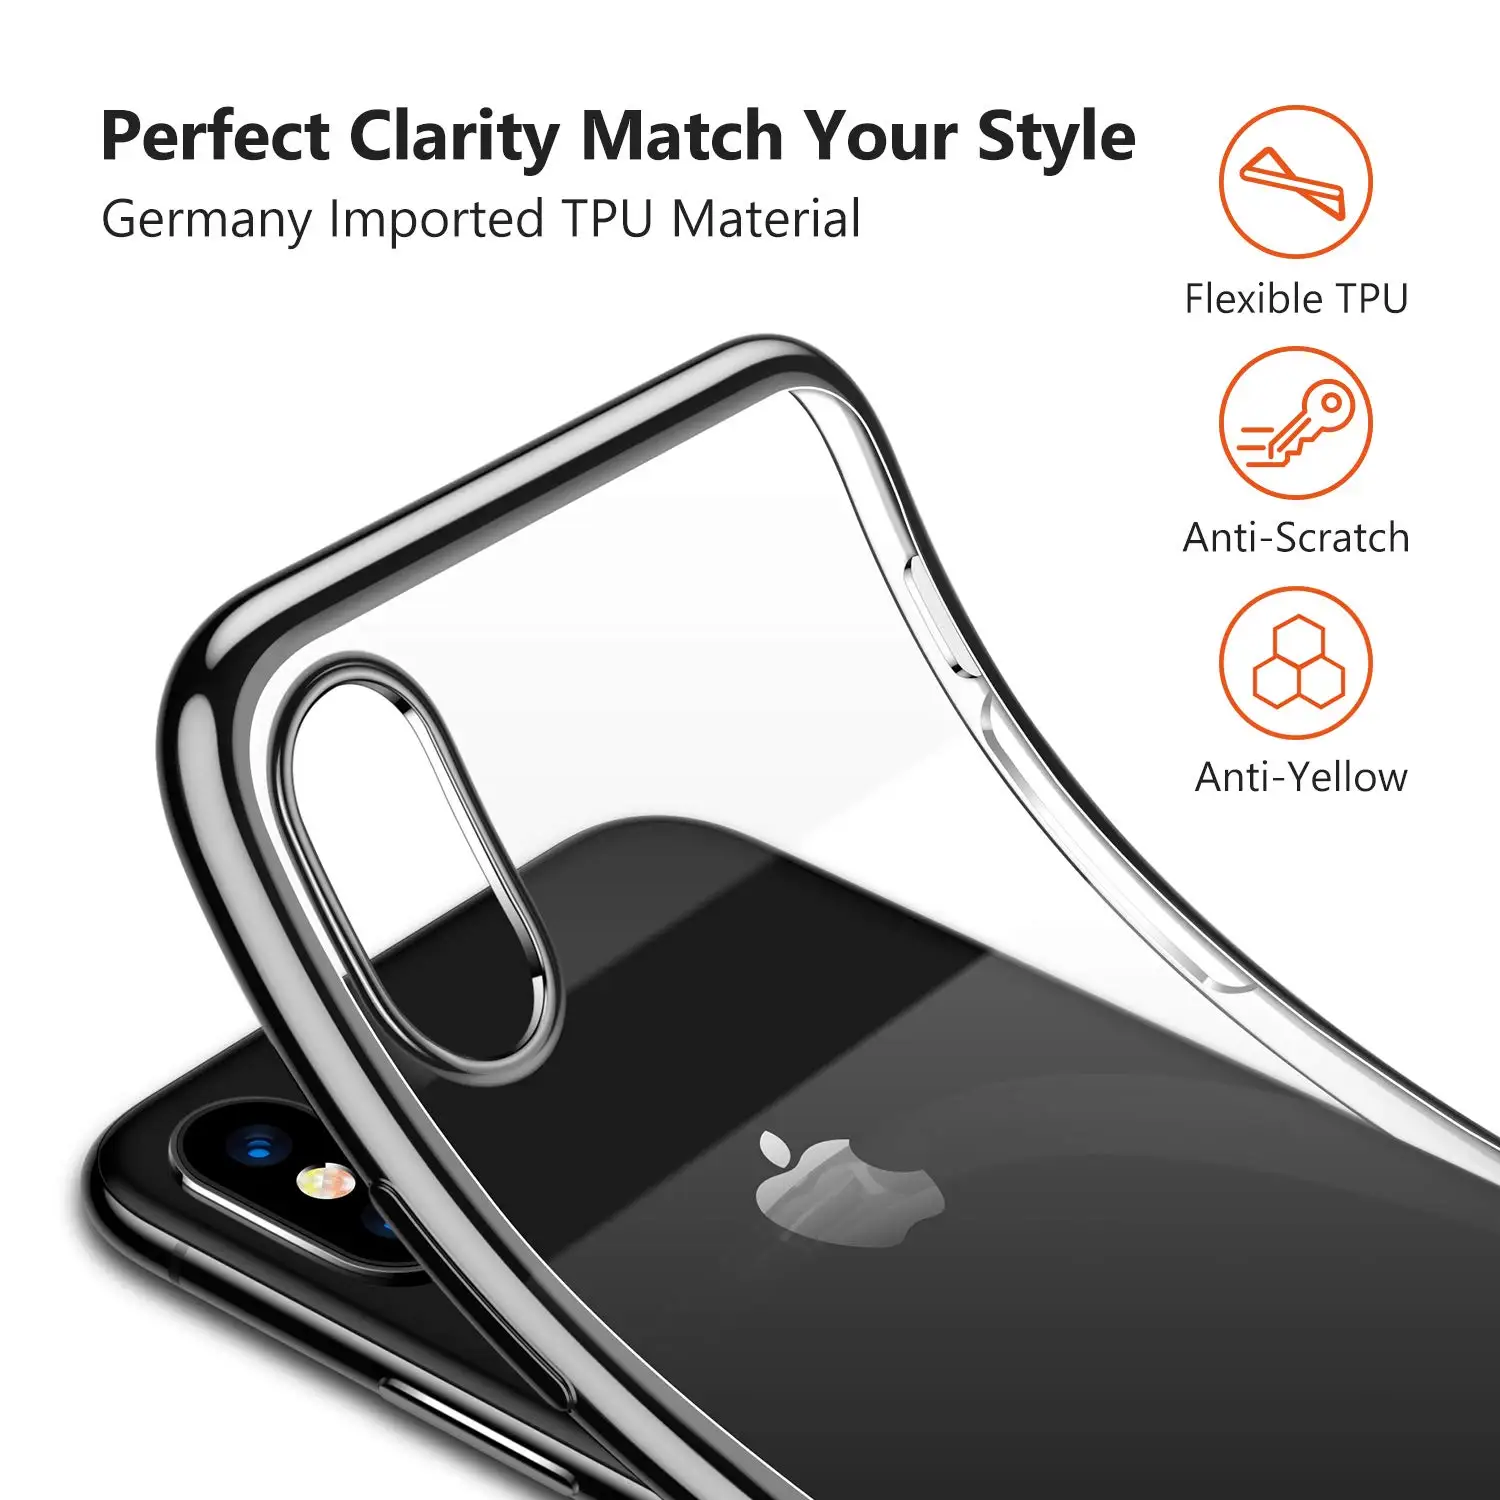 Чехол для iPhone X Xs Max XR 8 Plus, ультра тонкий плотно прилегающий Мягкий Силиконовый ТПУ [Анти-Желтый] чехол для телефона